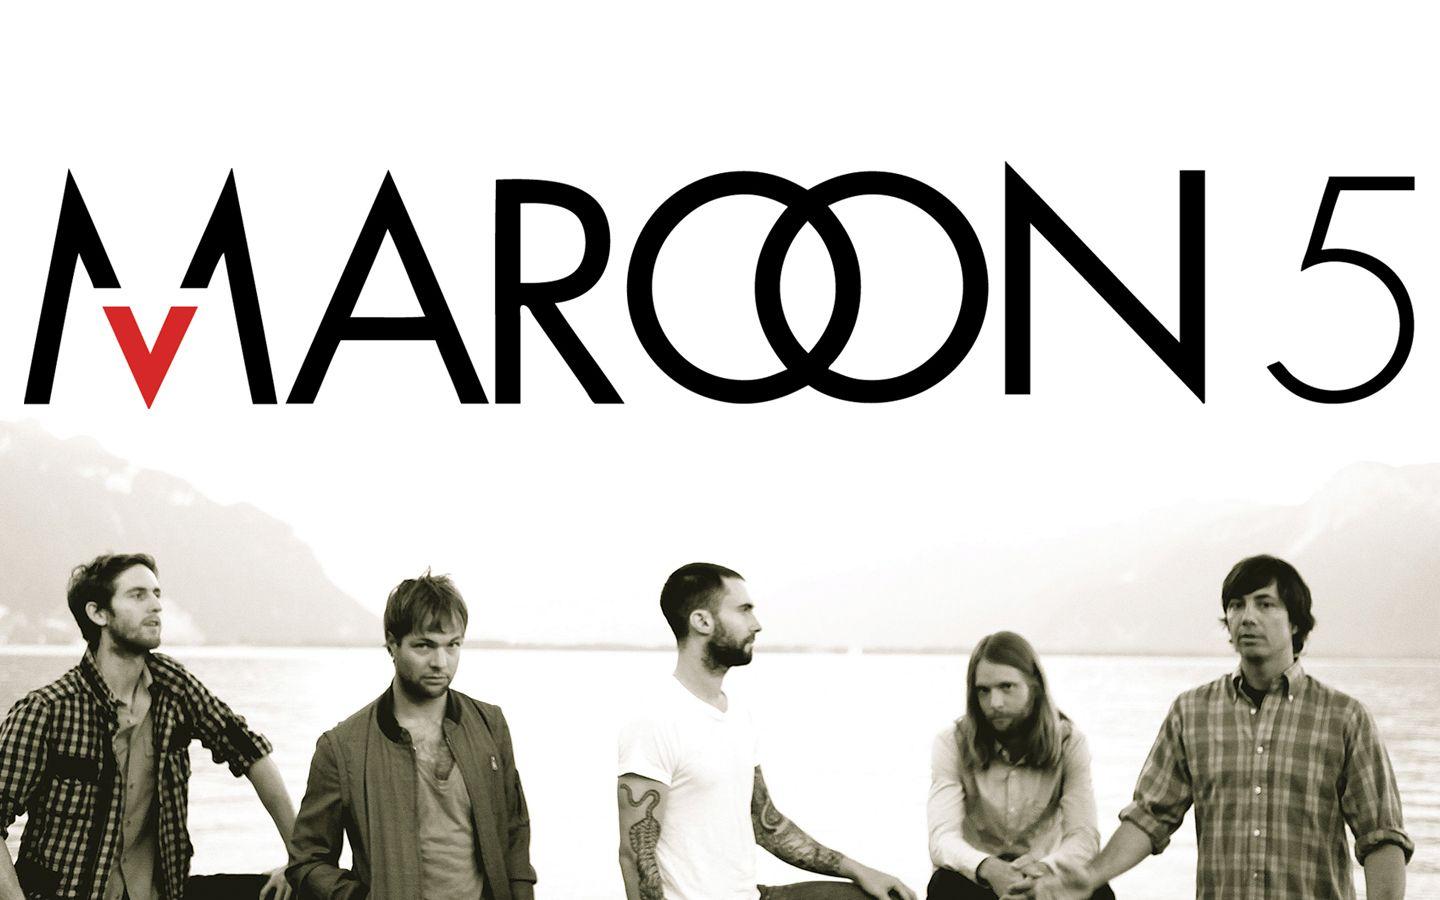 Black Maroon 5 Logo - Maroon 5 Band Image Wallpaper Wallpaper | WallpaperLepi